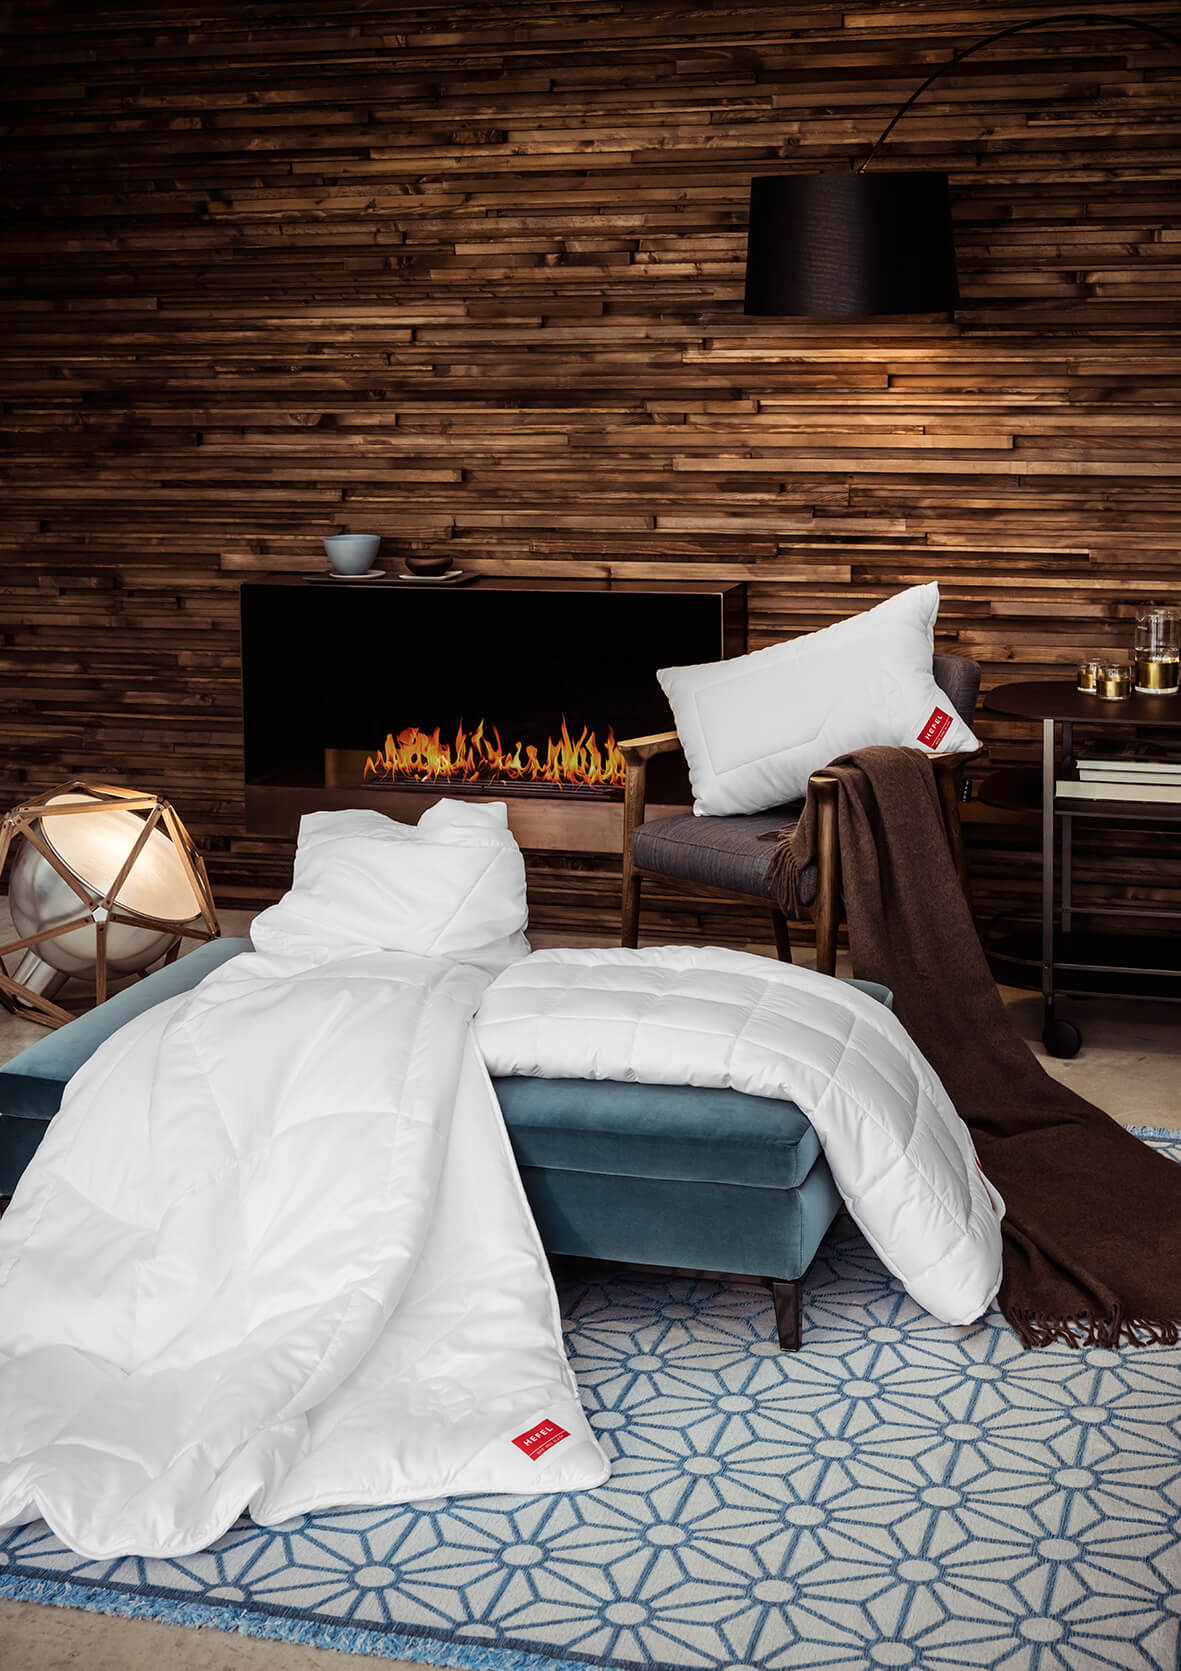 Наволочка на подушку Hefel Klimacontrol Comfort ☞ Размер наволочек: 60 x 80 см